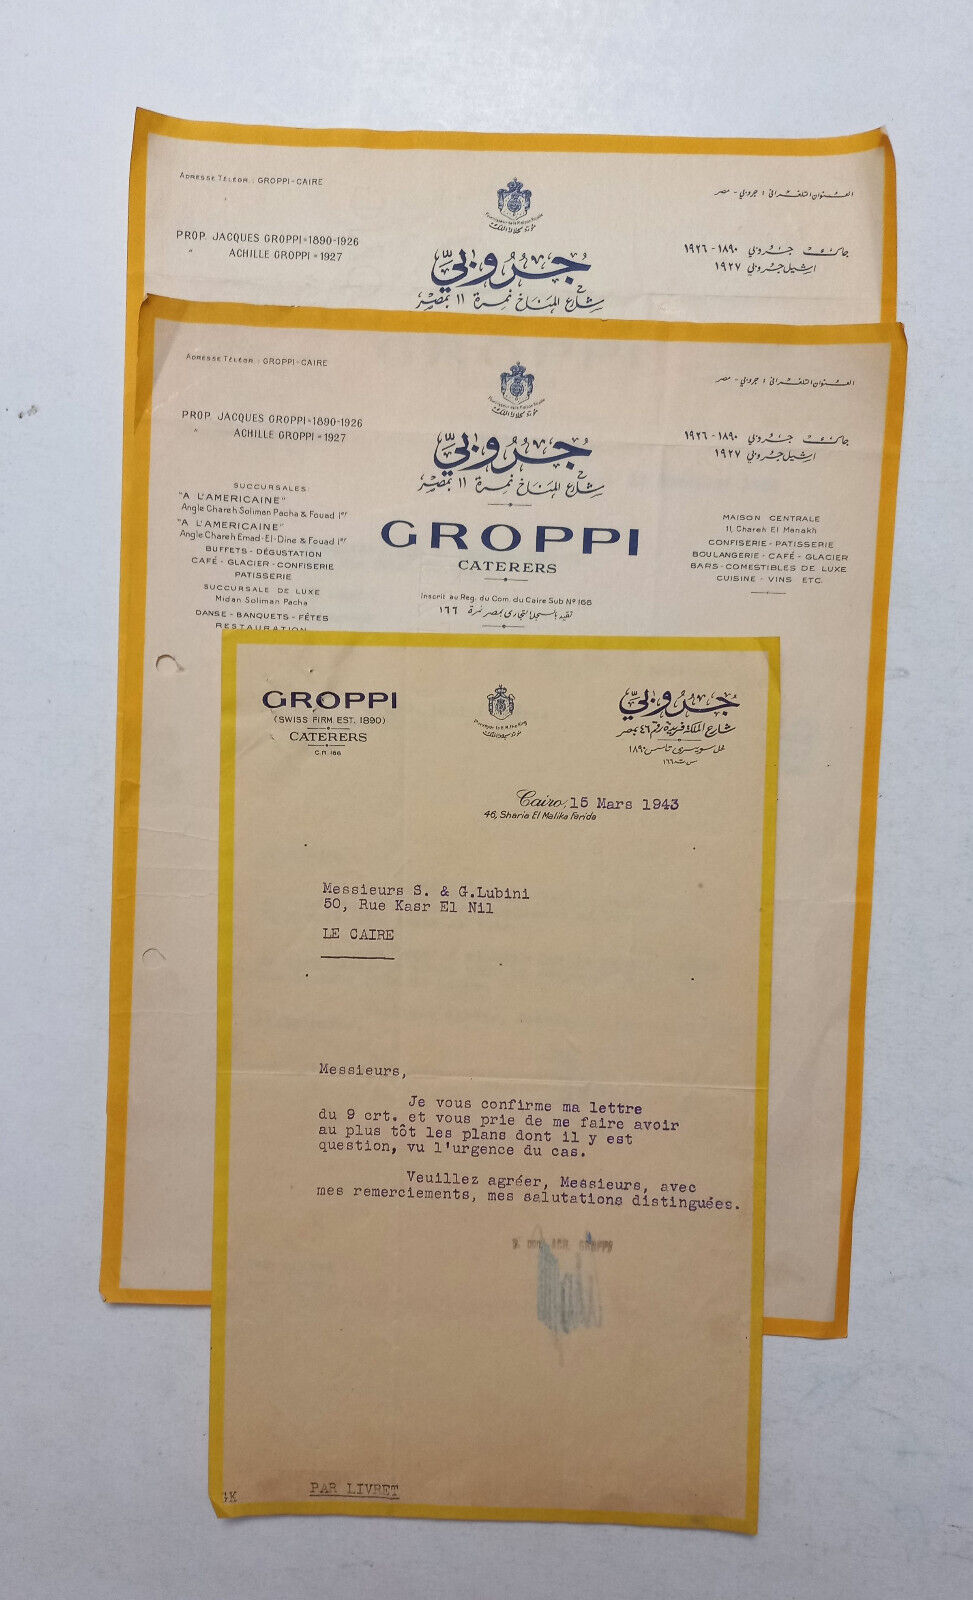 1938 - 1943 Egypt-Judea Rare Old Invoice - Jack - Achilles Groppi, No. 3